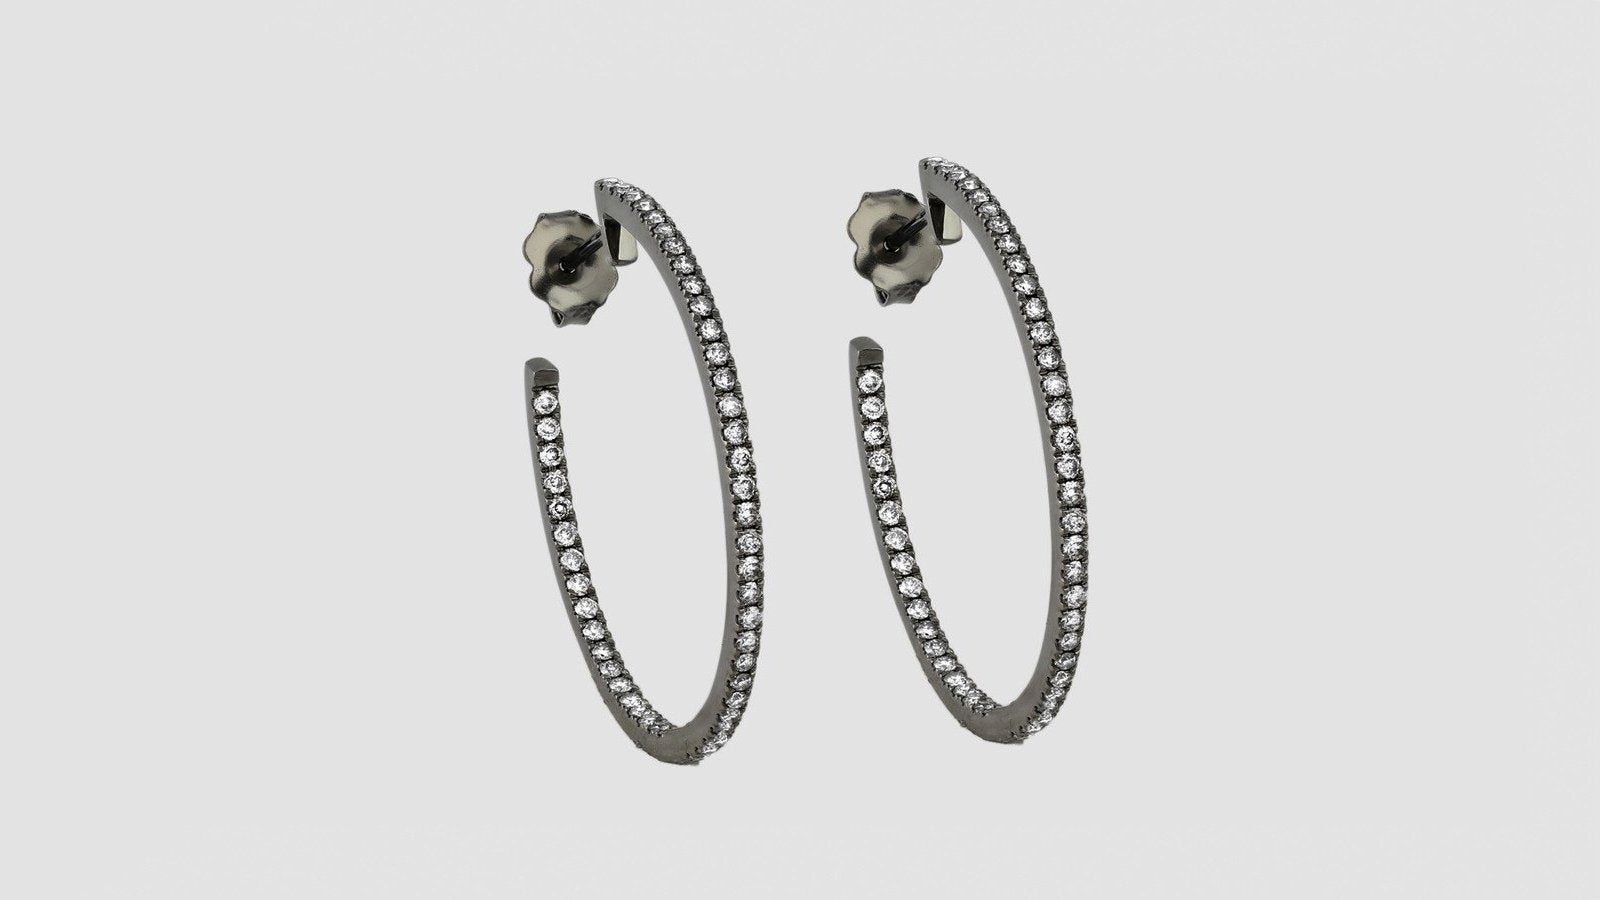 Flower Diamond Stud Earrings with 0.50 Carats